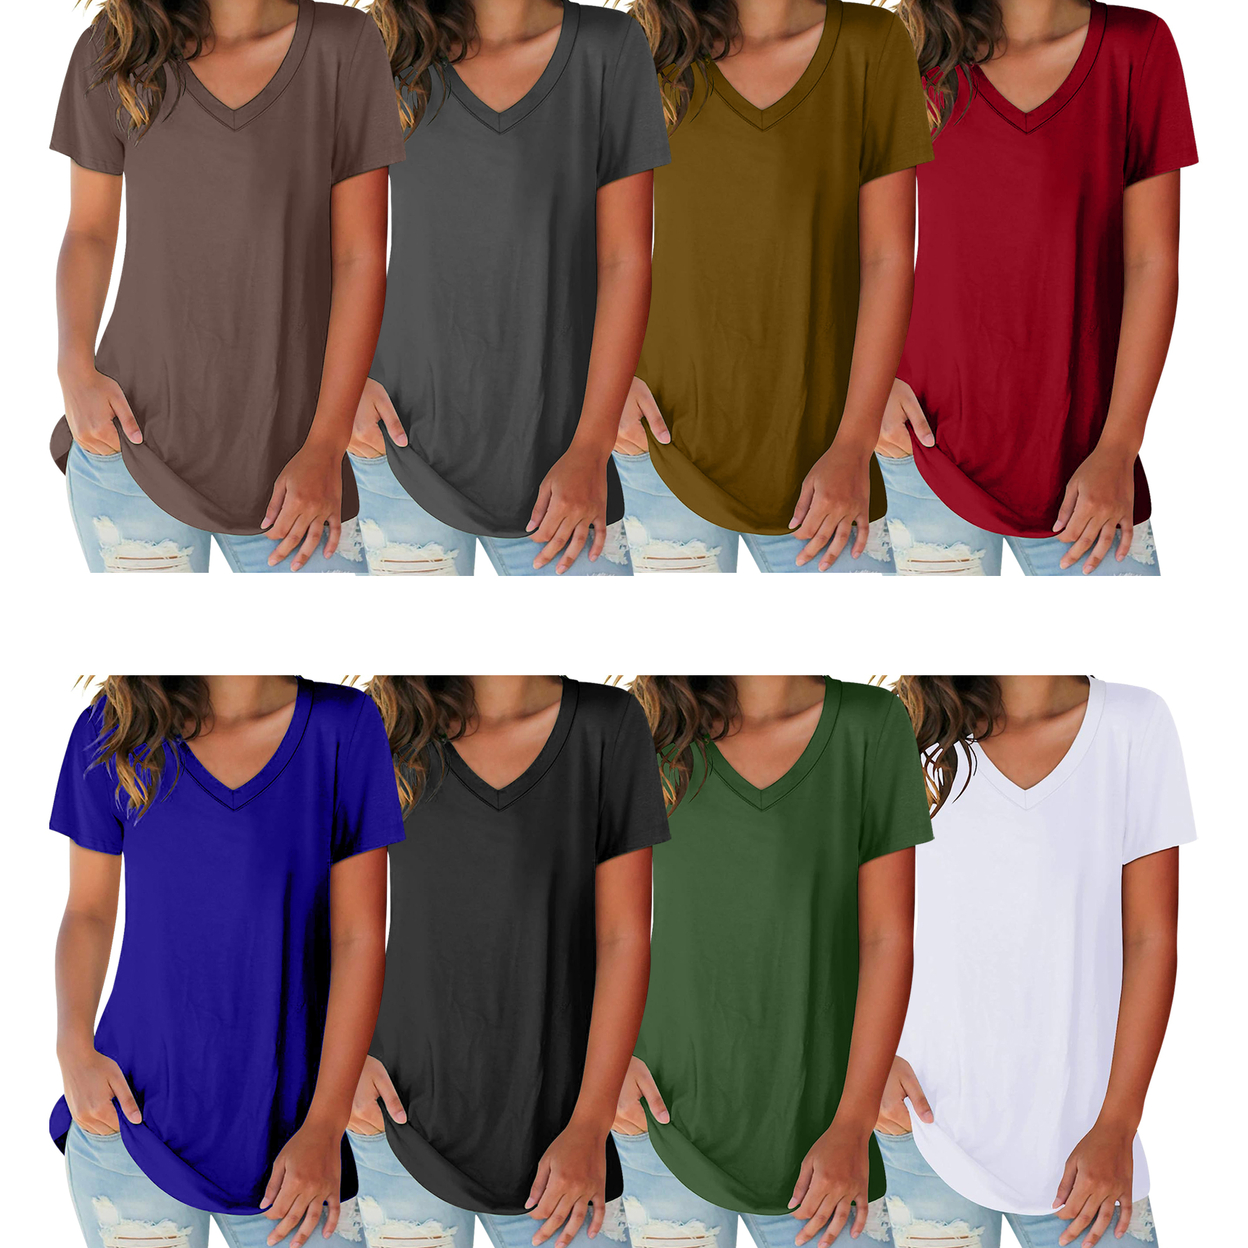 2-Pack: Women's Ultra Soft Smooth Cotton Blend Basic V-Neck Short Sleeve Shirts - Grey & Mustard, Xx-large